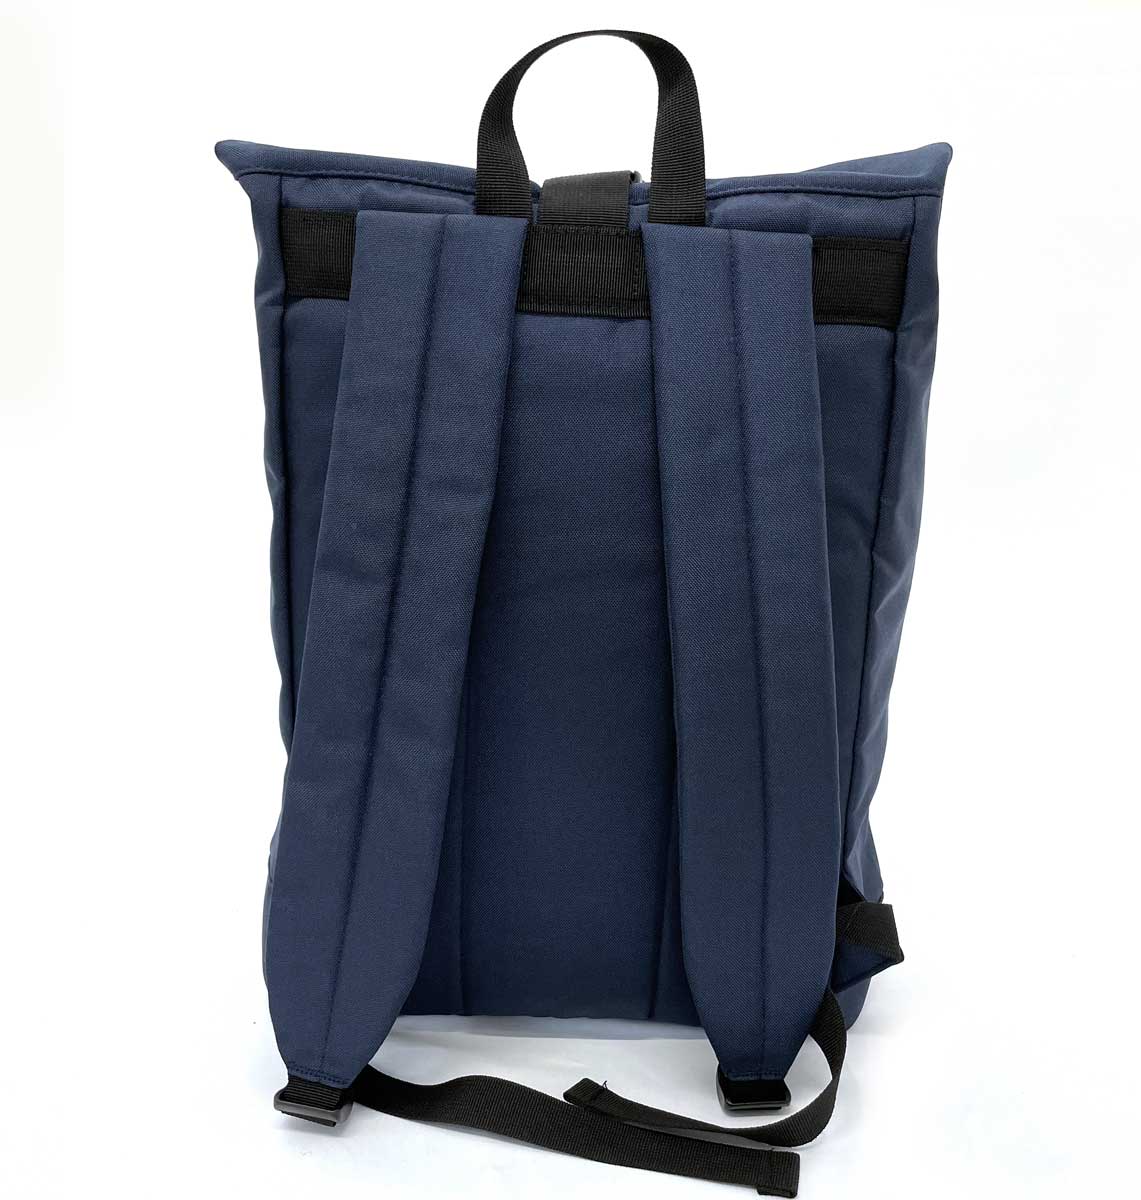 Fox Beach Roll-top Recycled Backpack - Blue Panda